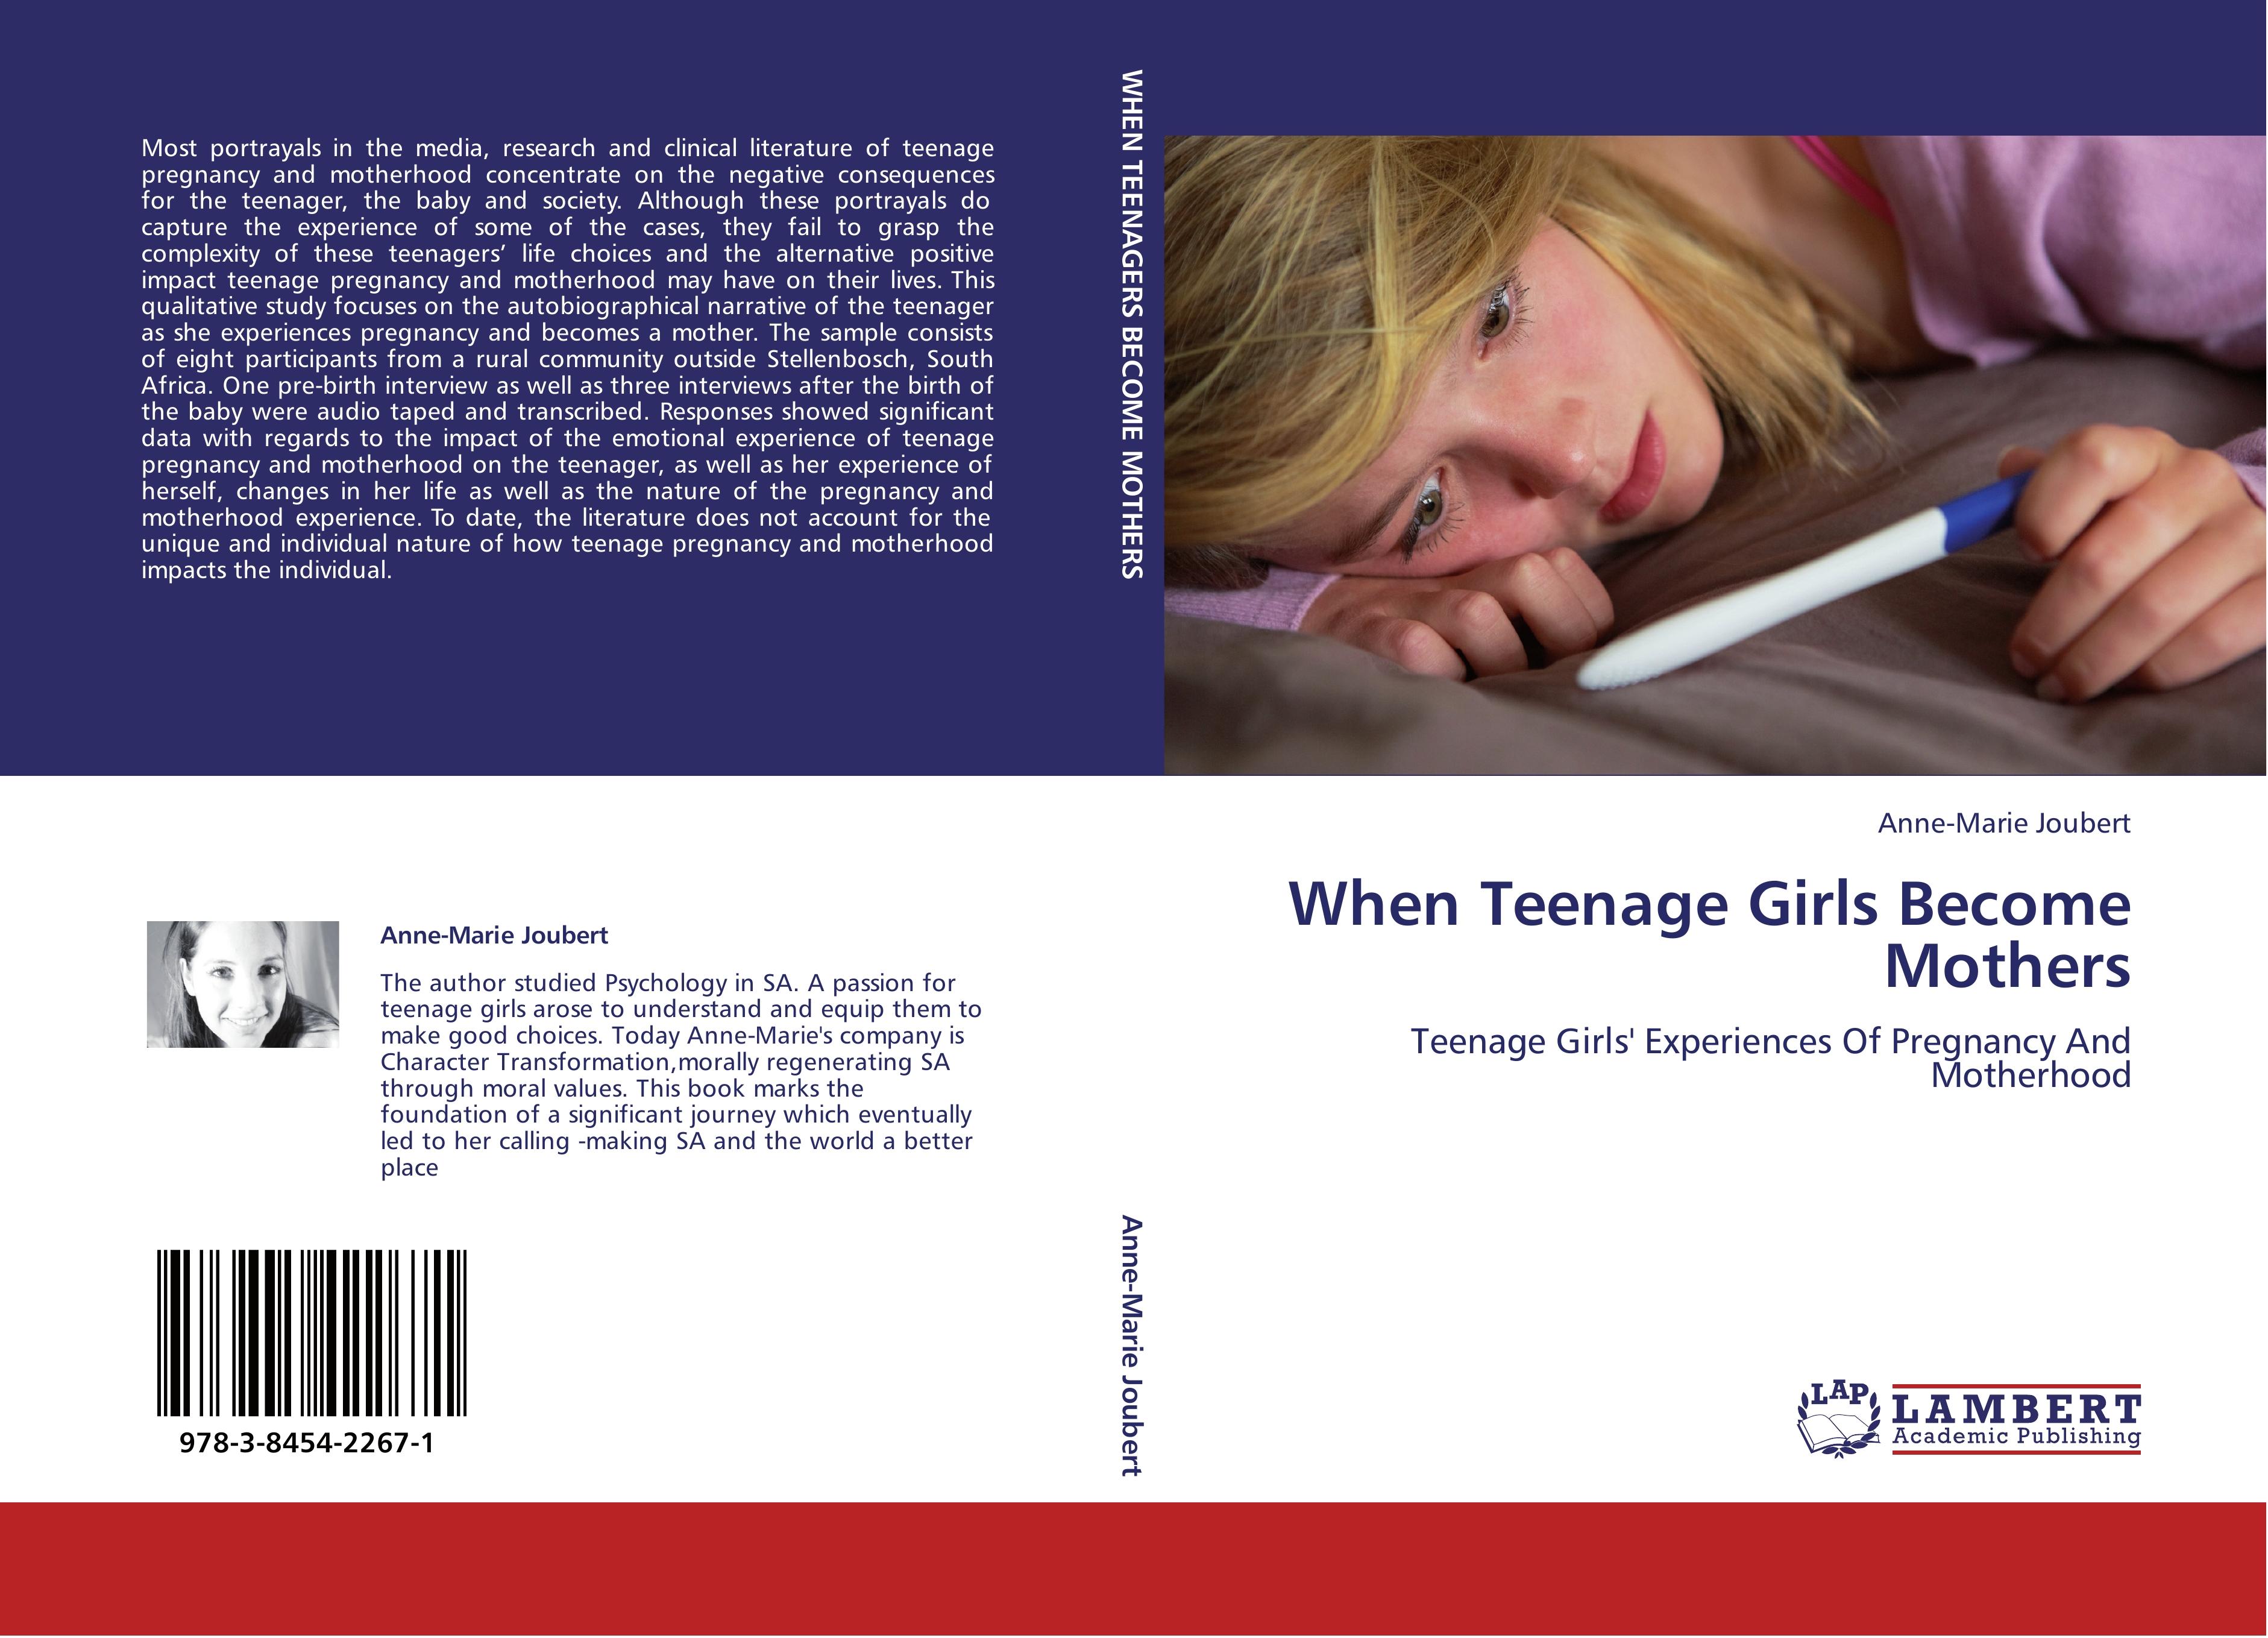 When Teenage Girls Become Mothers / Teenage Girls' Experiences Of Pregnancy And Motherhood / Anne-Marie Joubert / Taschenbuch / Paperback / 140 S. / Englisch / 2011 / LAP LAMBERT Academic Publishing - Joubert, Anne-Marie